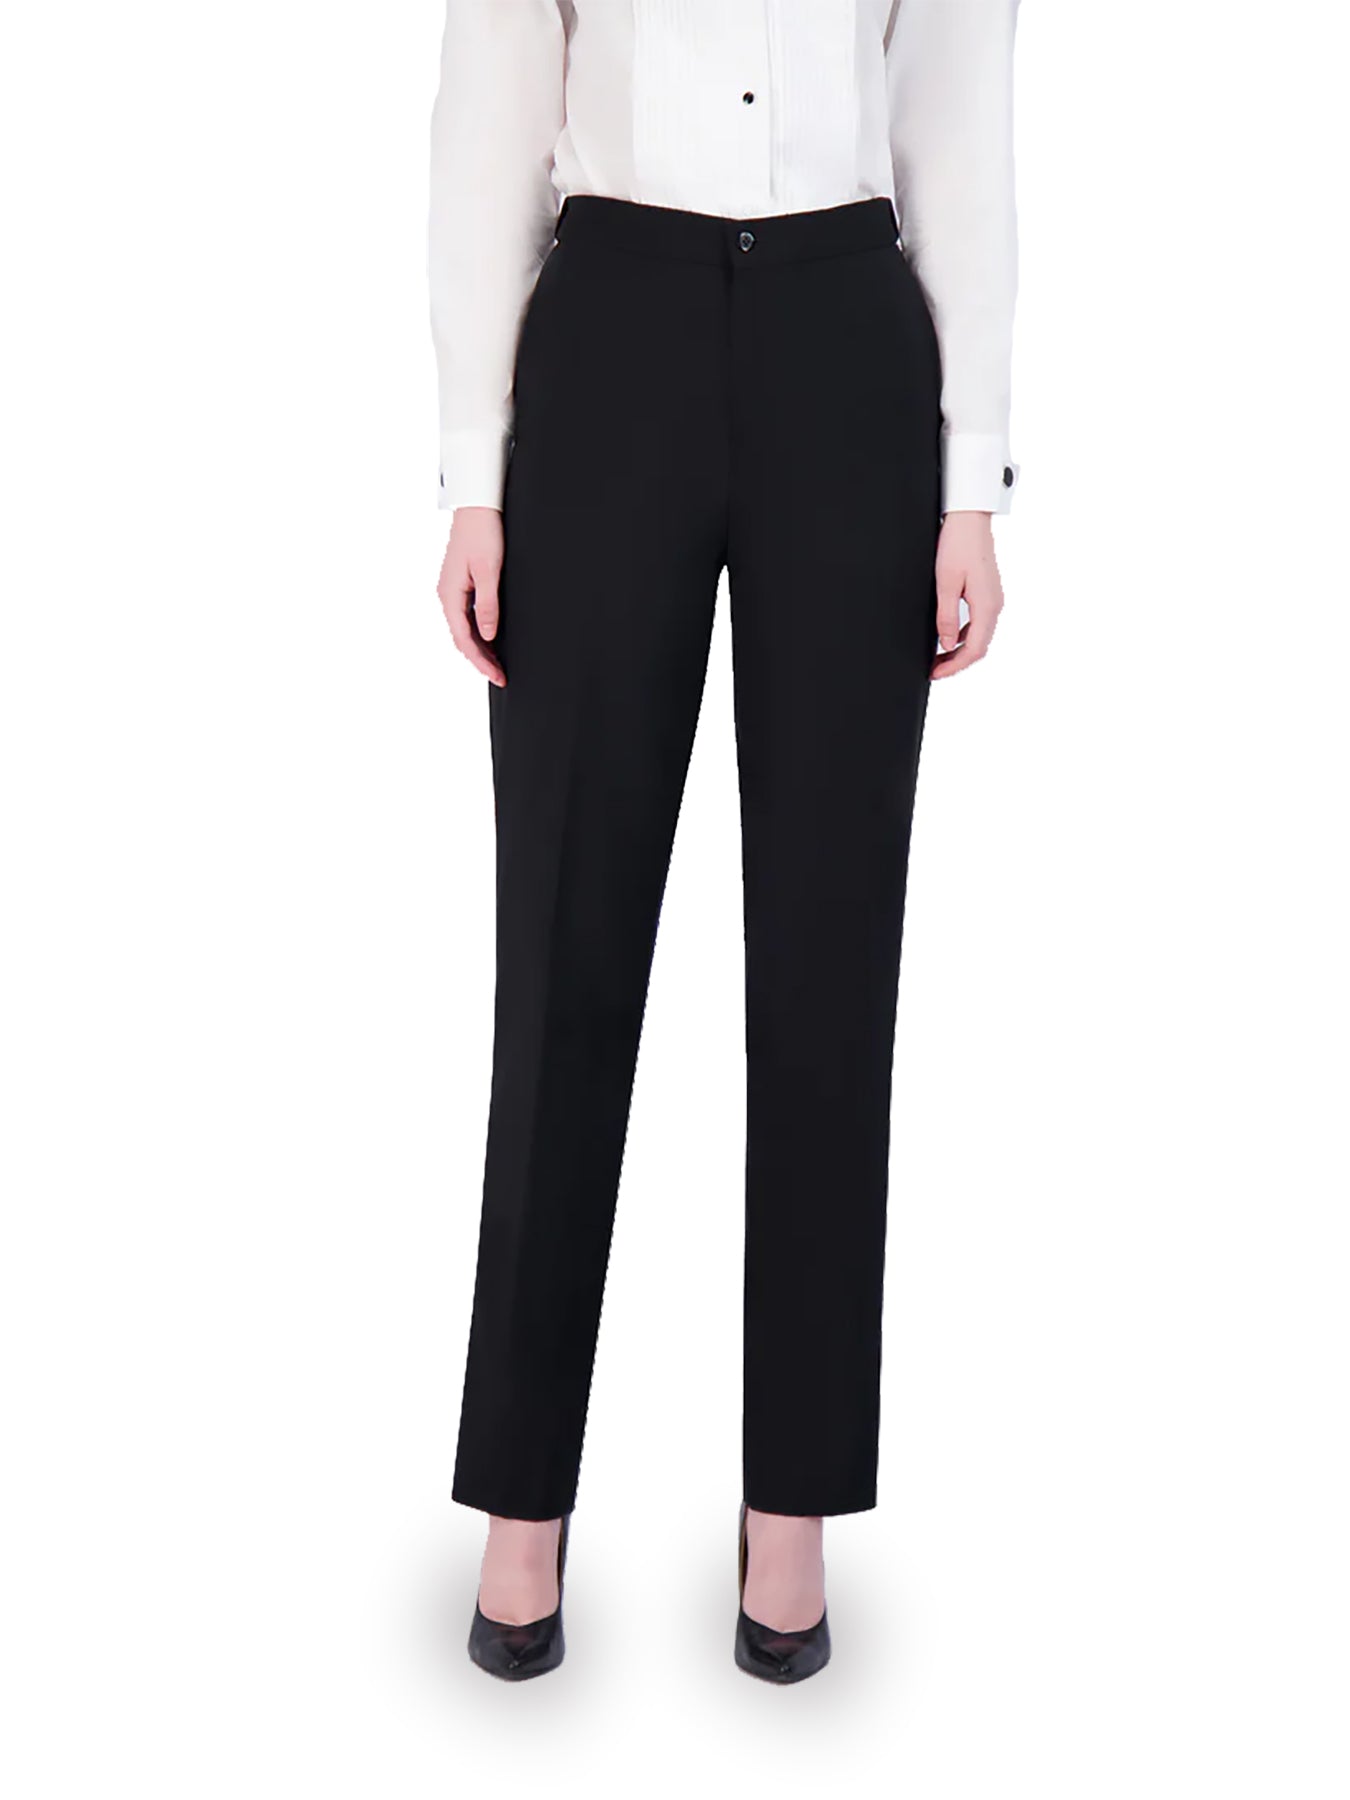 Stone Gray and Black Slim Fit Tuxedo Pants for Women – LITTLE BLACK TUX